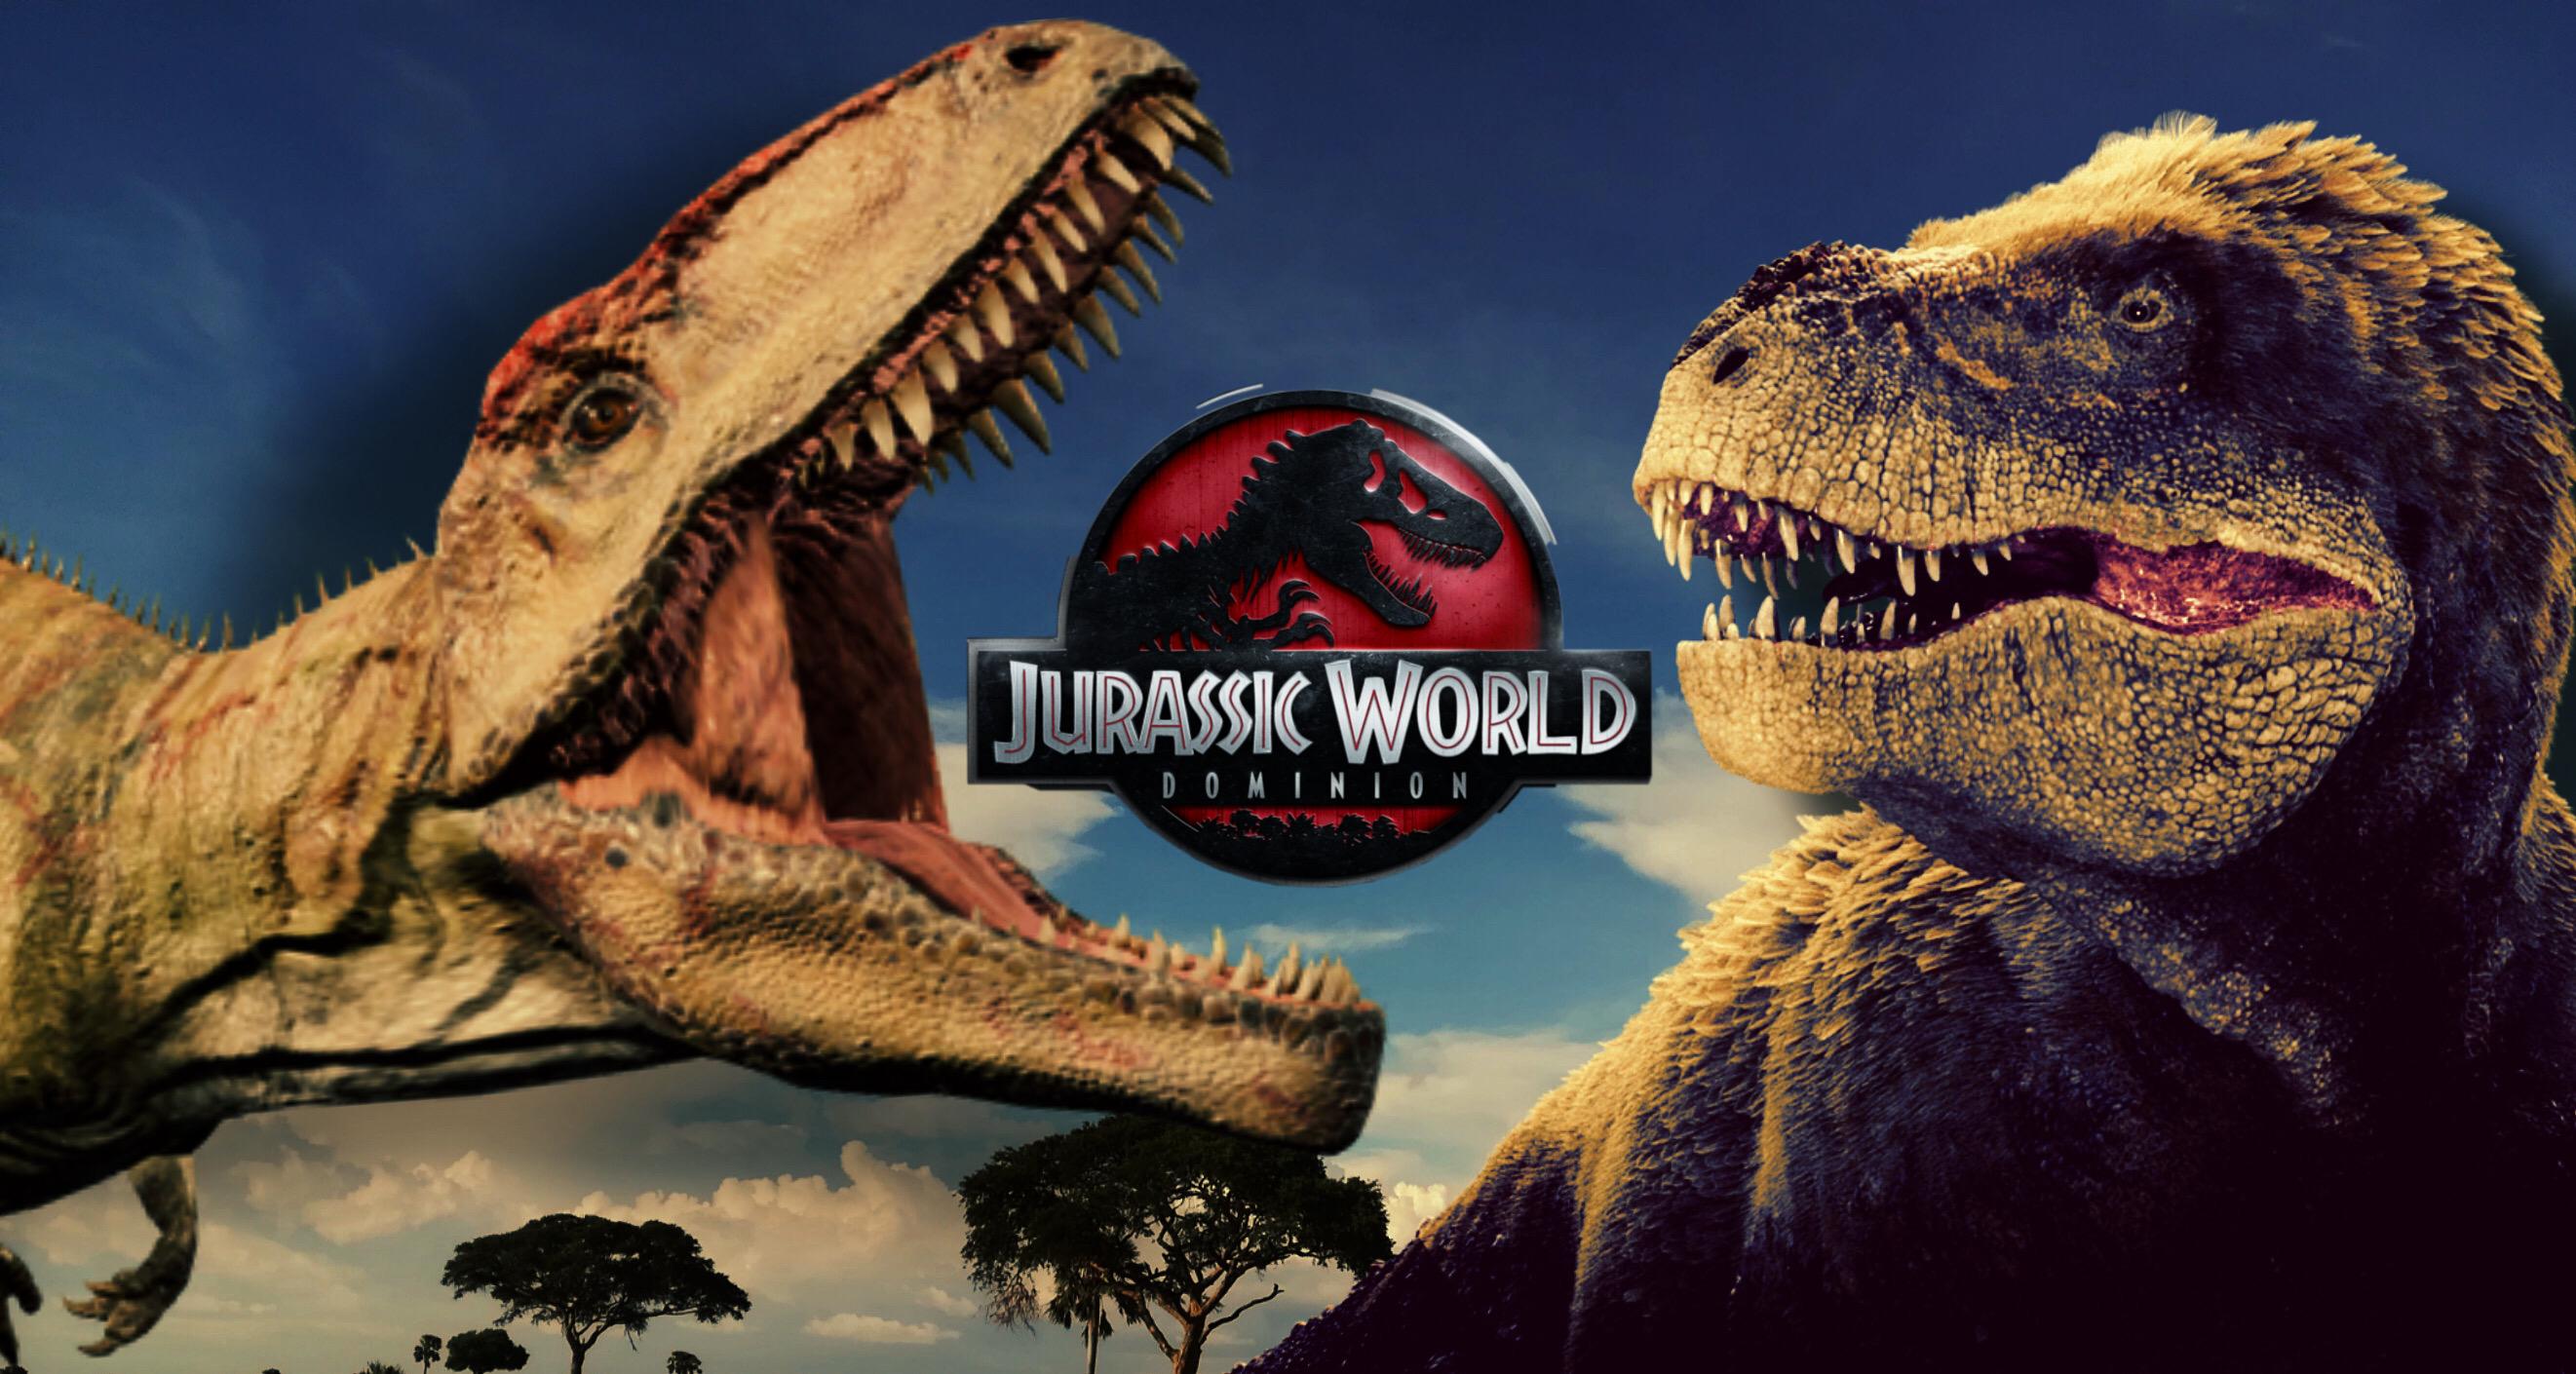 Jurassic World: Dominion download the last version for windows